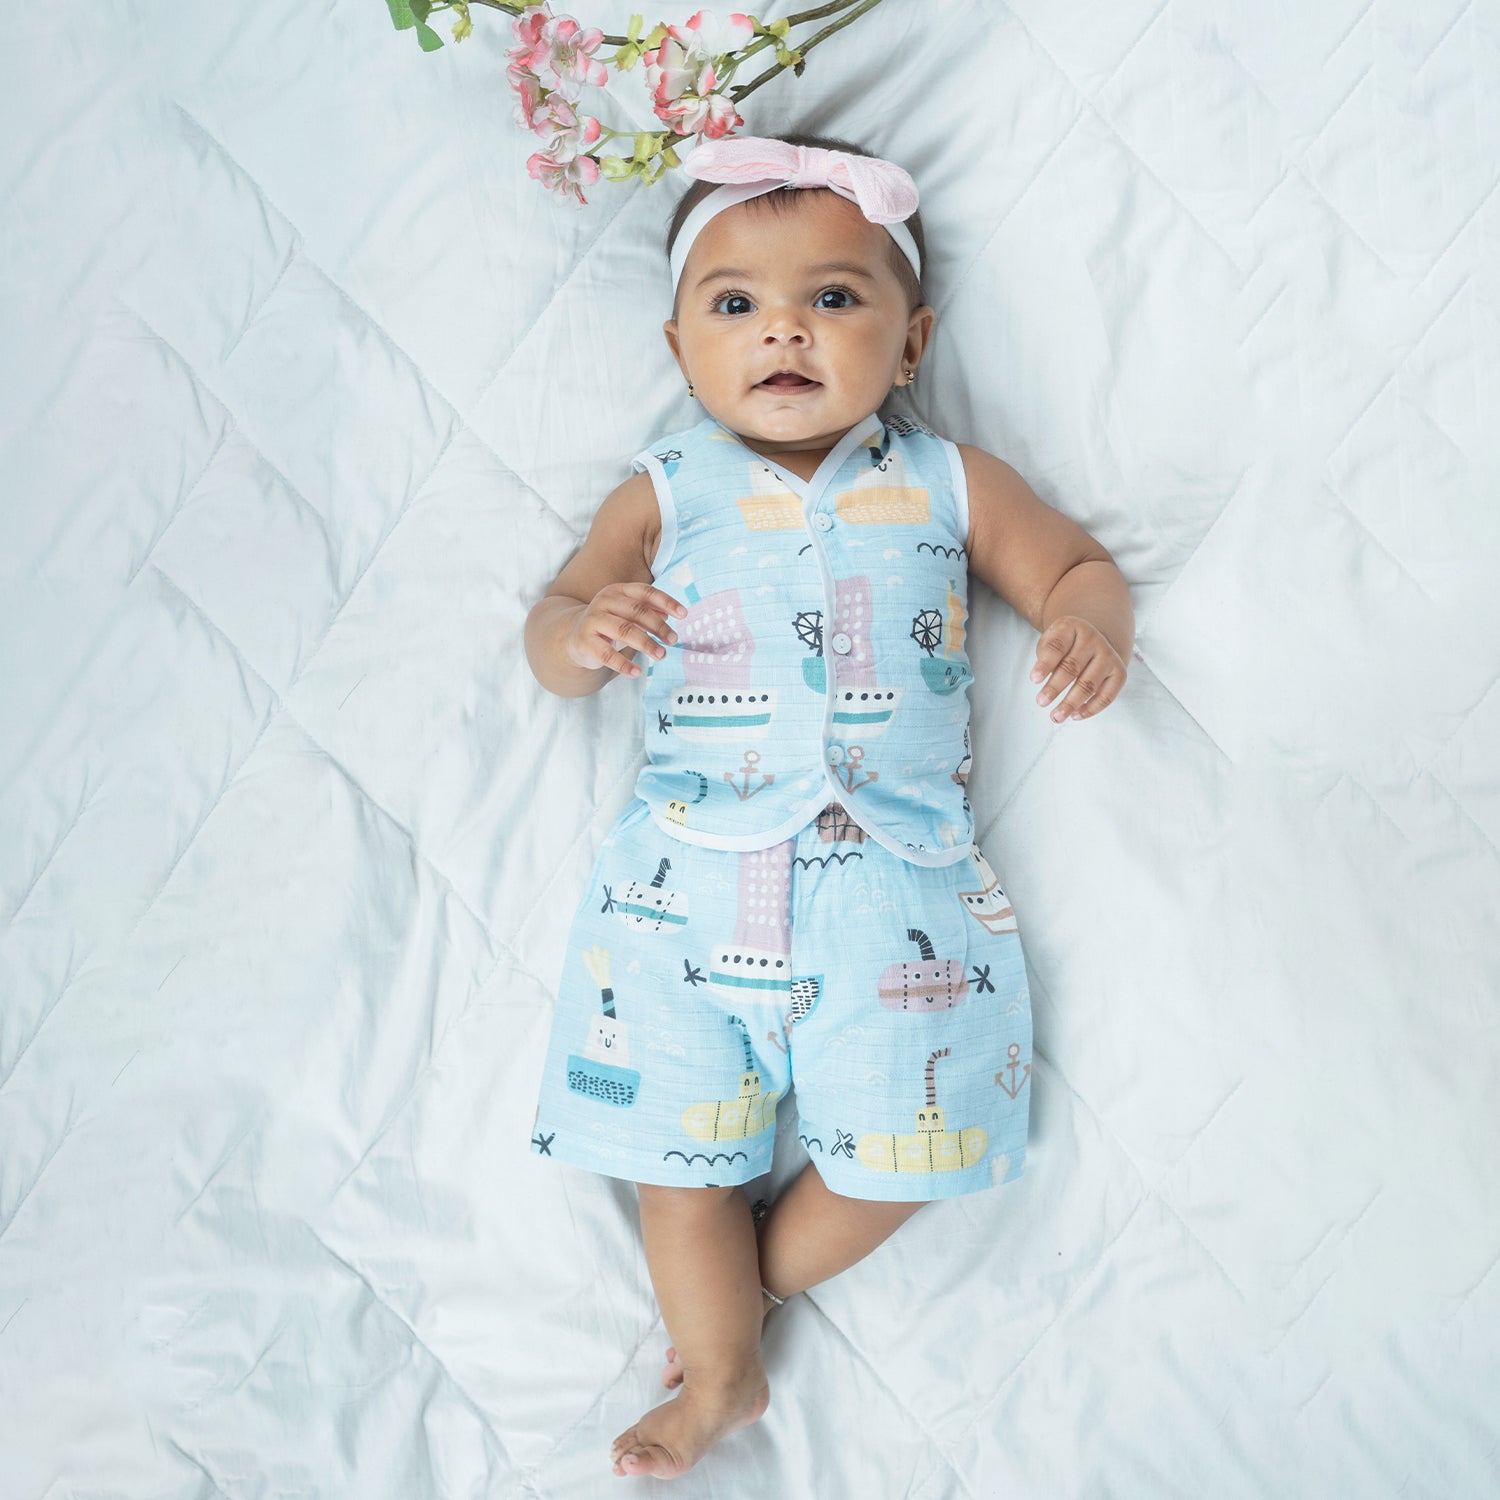 Baby Moo Submarine Print Infant Essentials 10 Pcs Muslin Clothing Gift Set - Multicolour